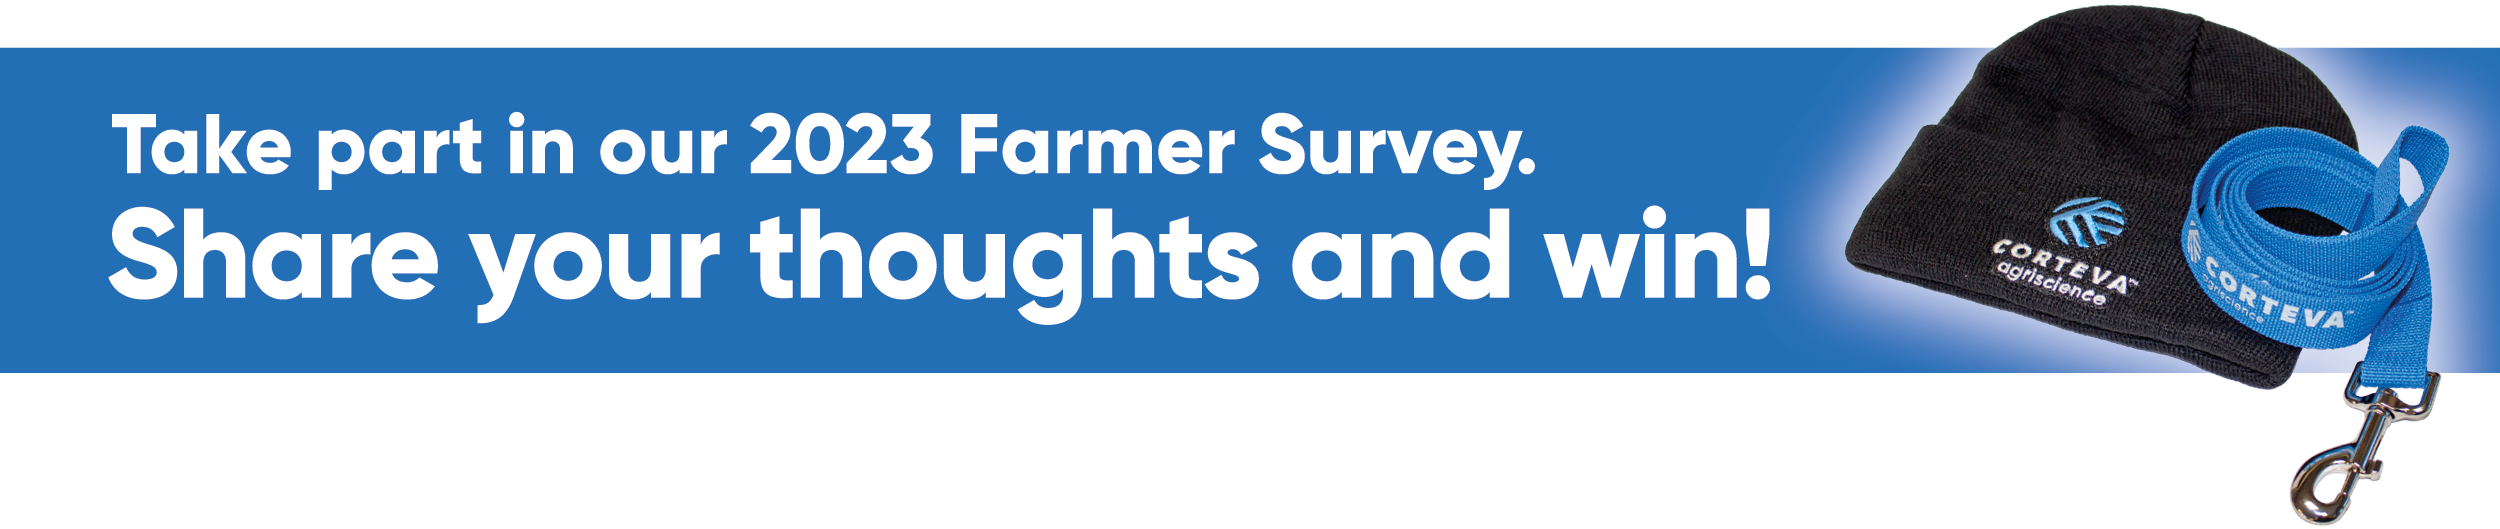 Farmer survey